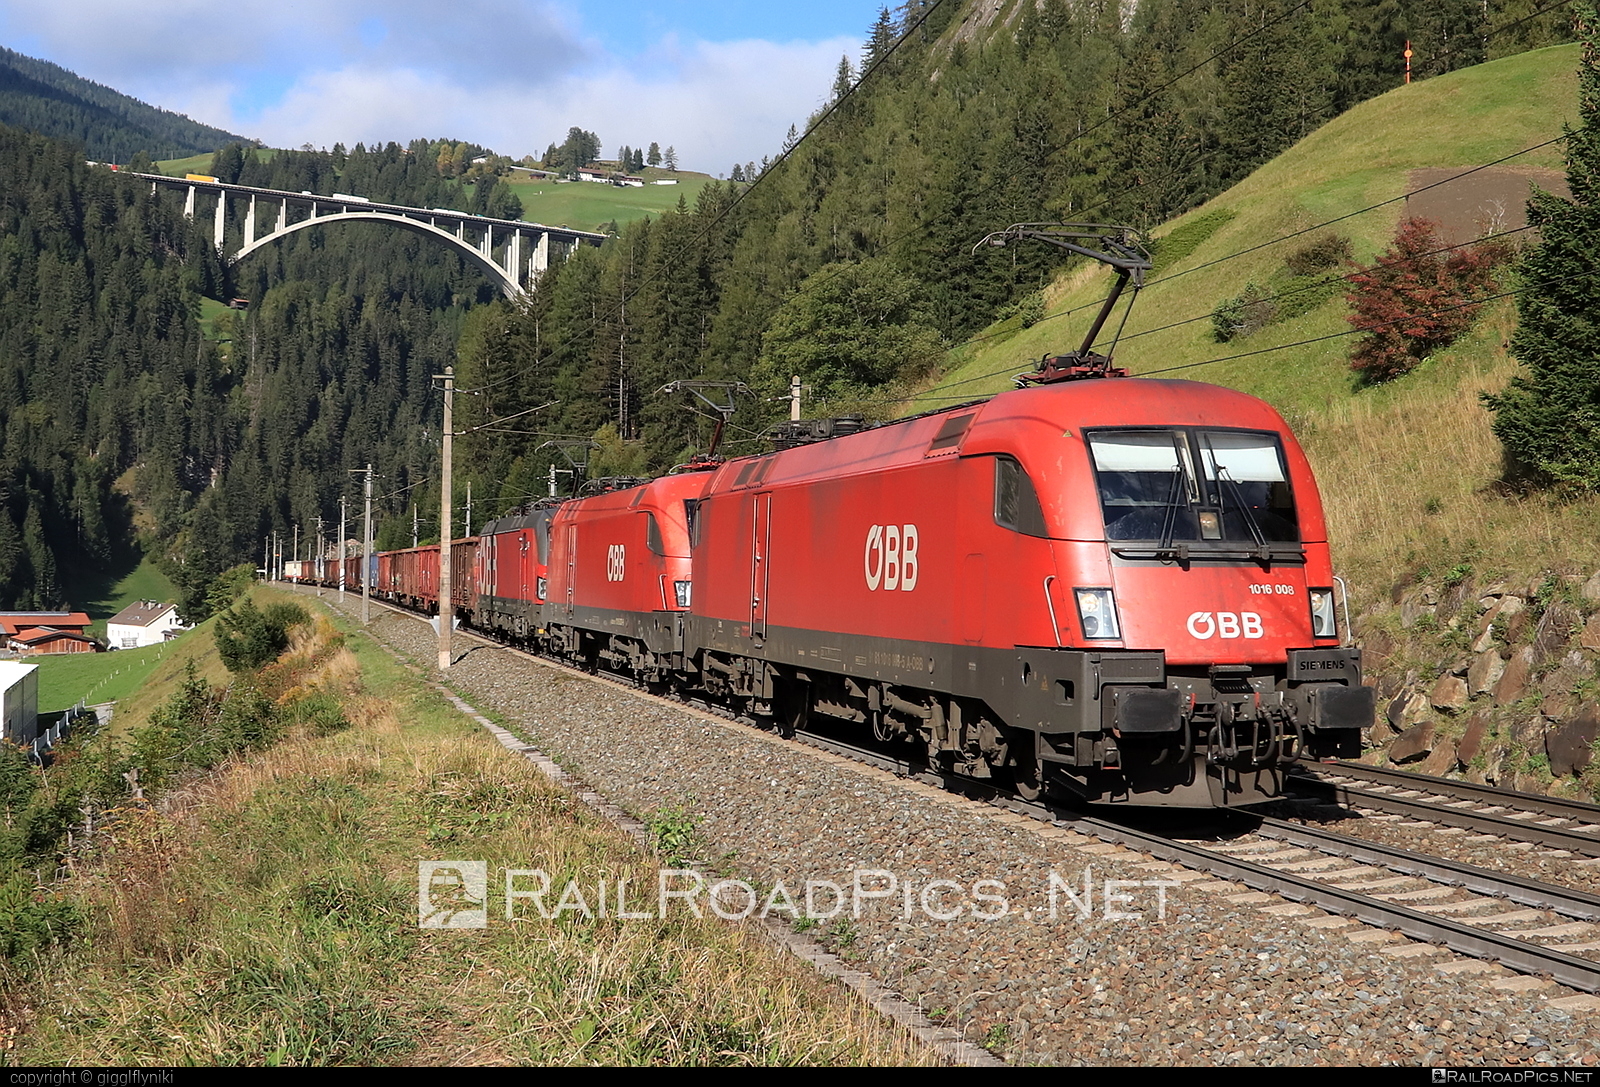 Siemens ES 64 U2 - 1016 008 operated by Rail Cargo Austria AG #es64 #es64u2 #eurosprinter #obb #openwagon #osterreichischebundesbahnen #rcw #siemens #siemensEs64 #siemensEs64u2 #siemenstaurus #taurus #tauruslocomotive